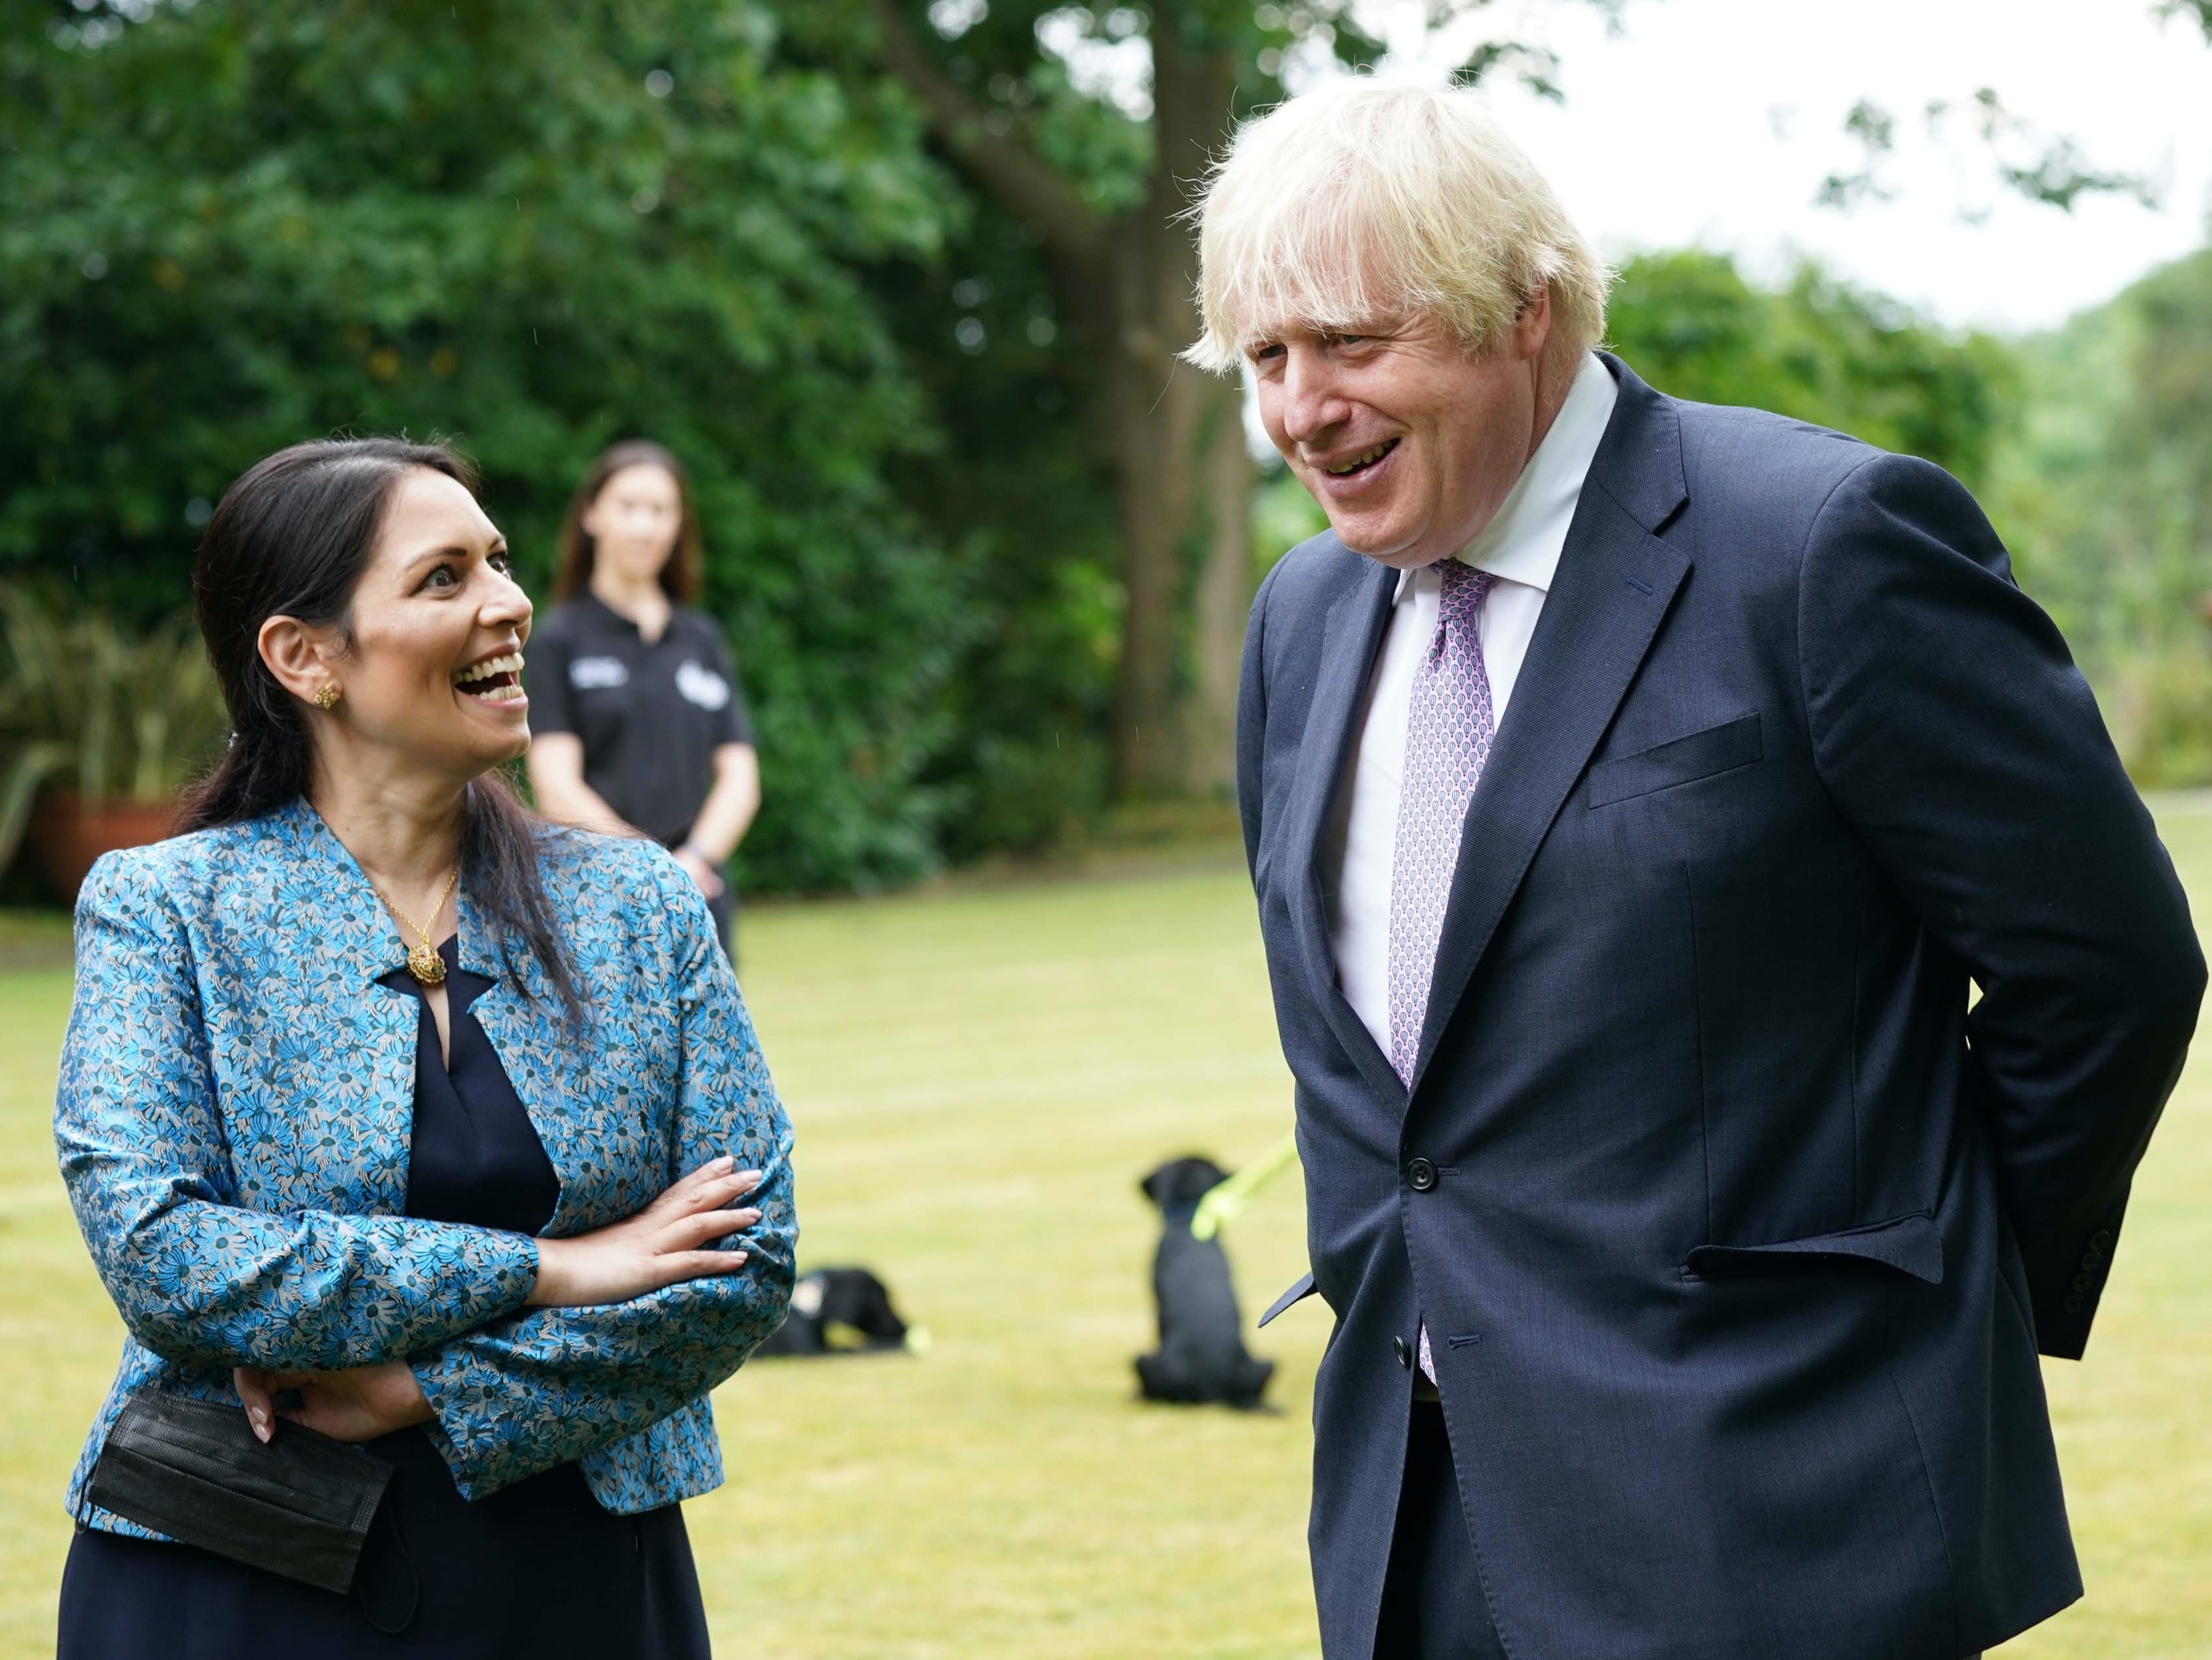 Boris Johnson and his home secretary, Priti Patel, at Surrey Police headquarters on Tuesday